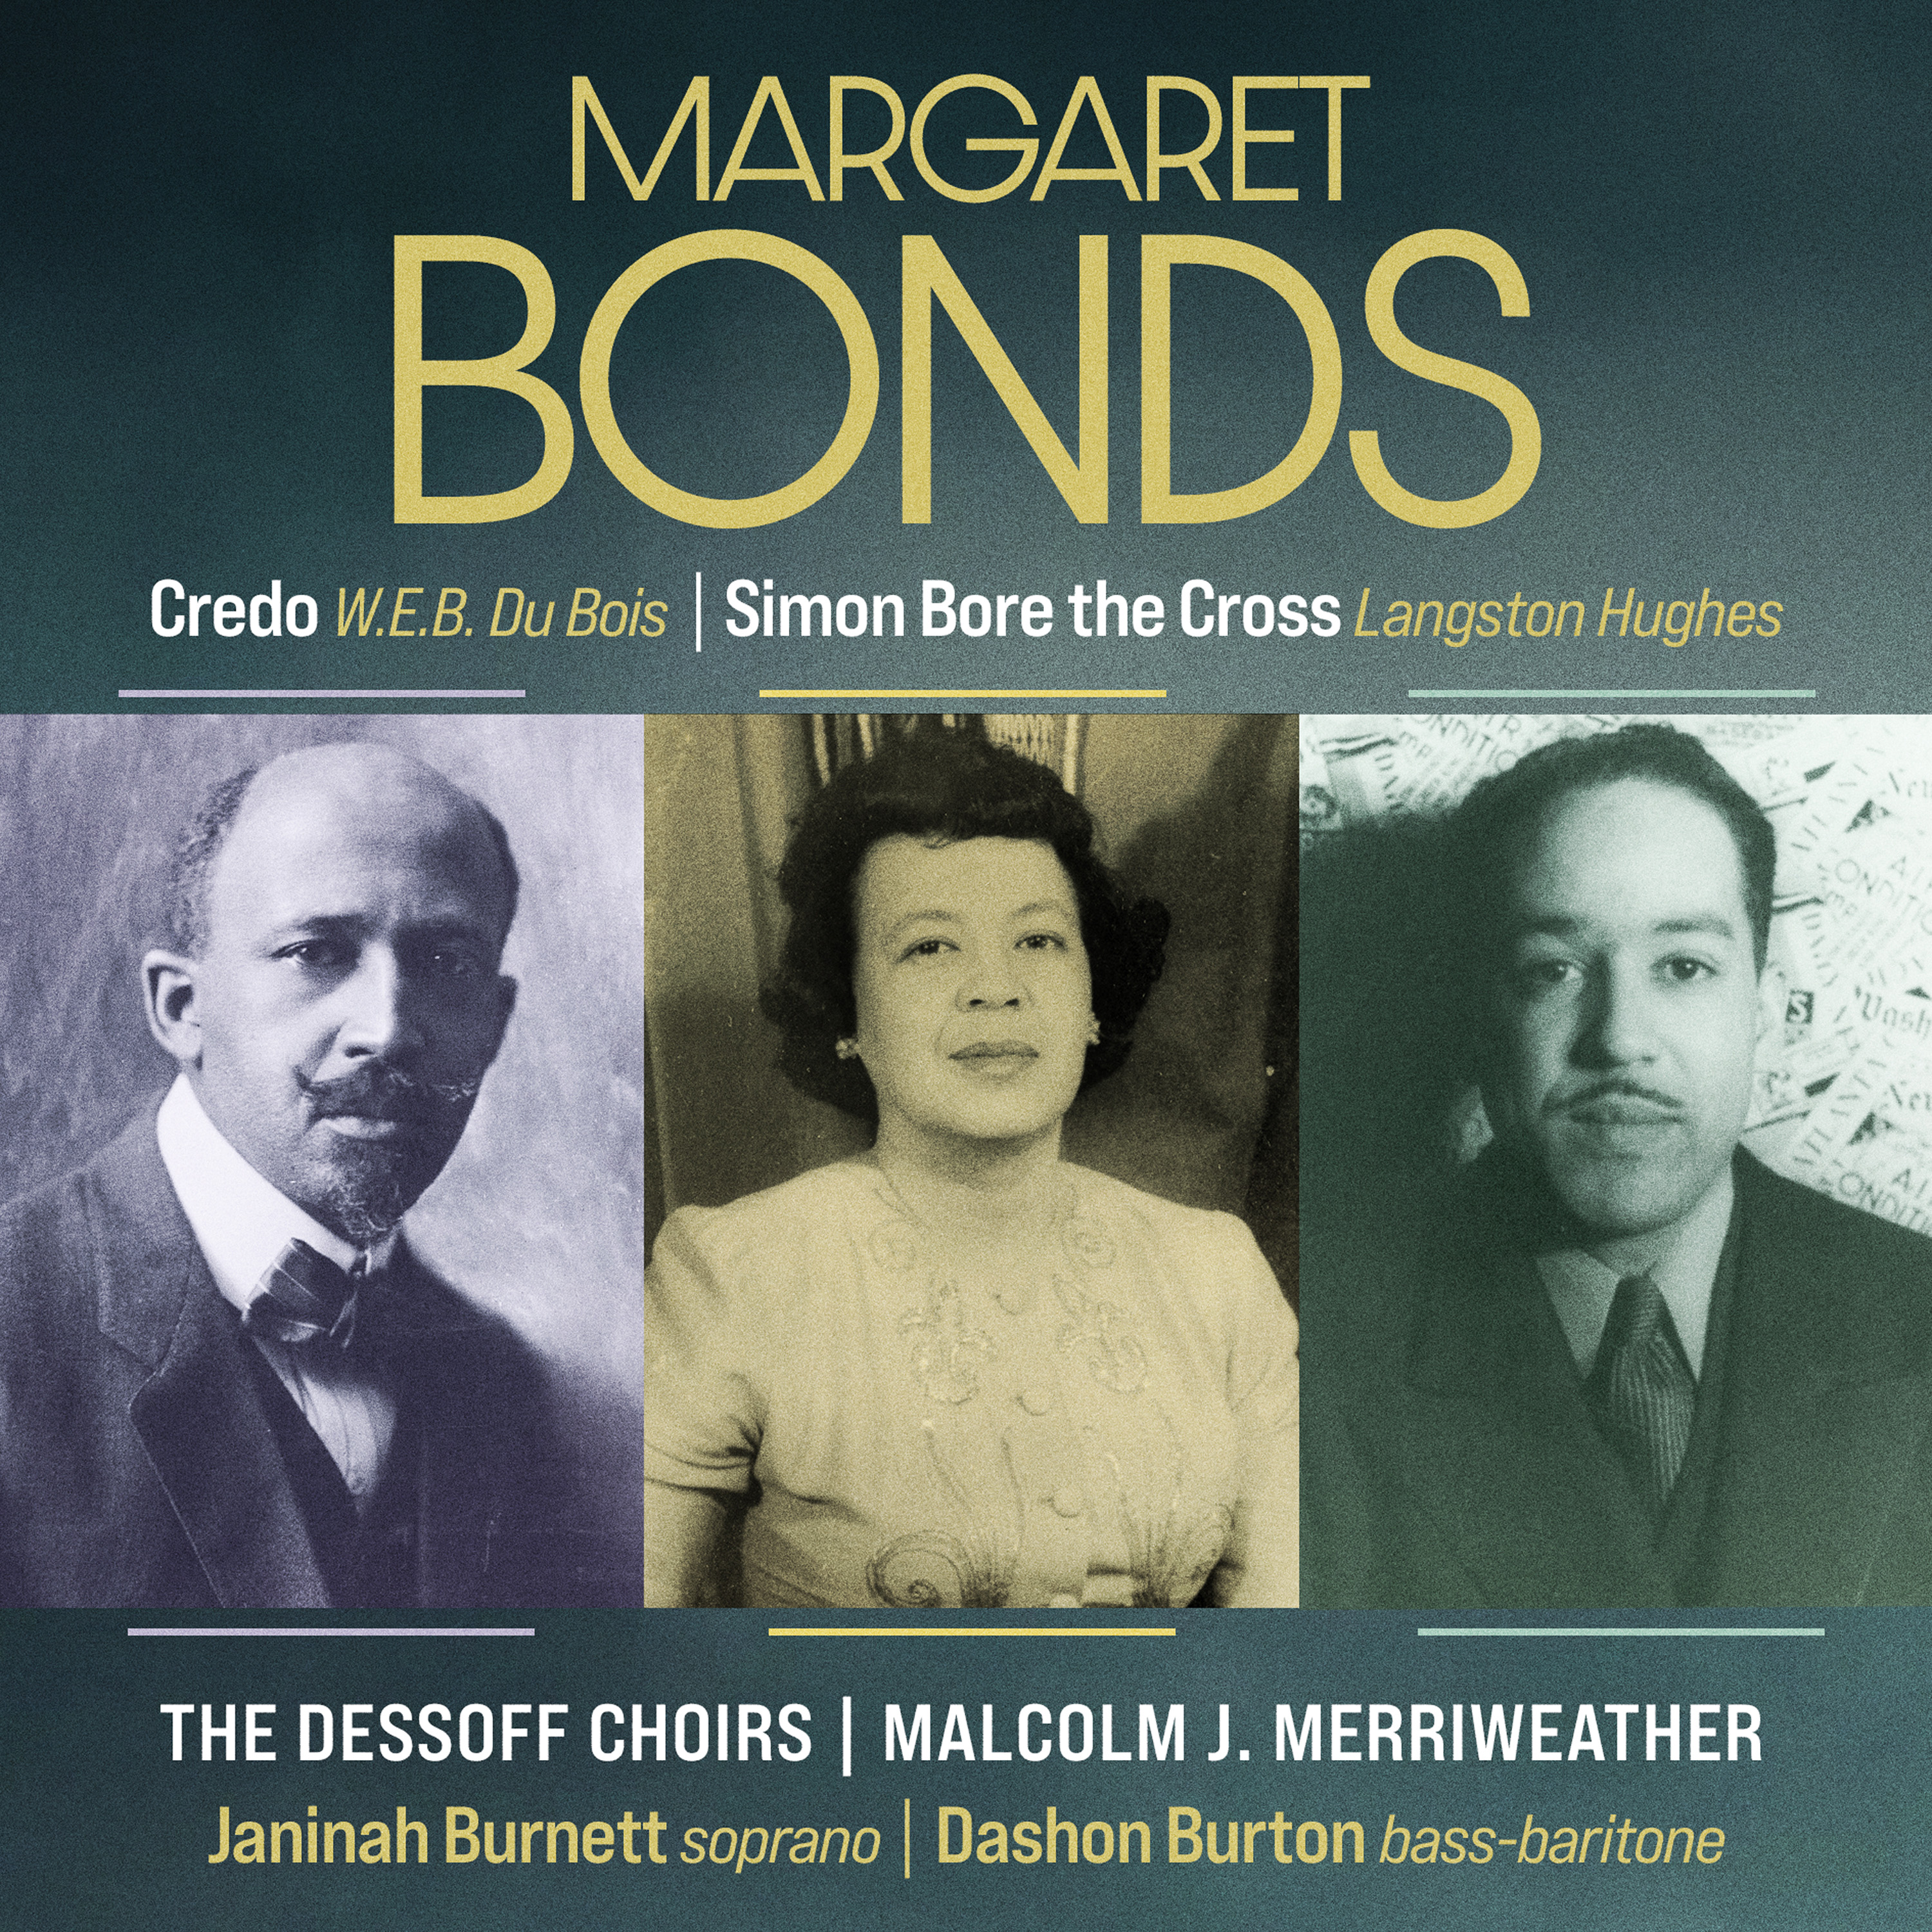 Margaret Bonds: Credo, Simon Bore the Cross | Avie Records